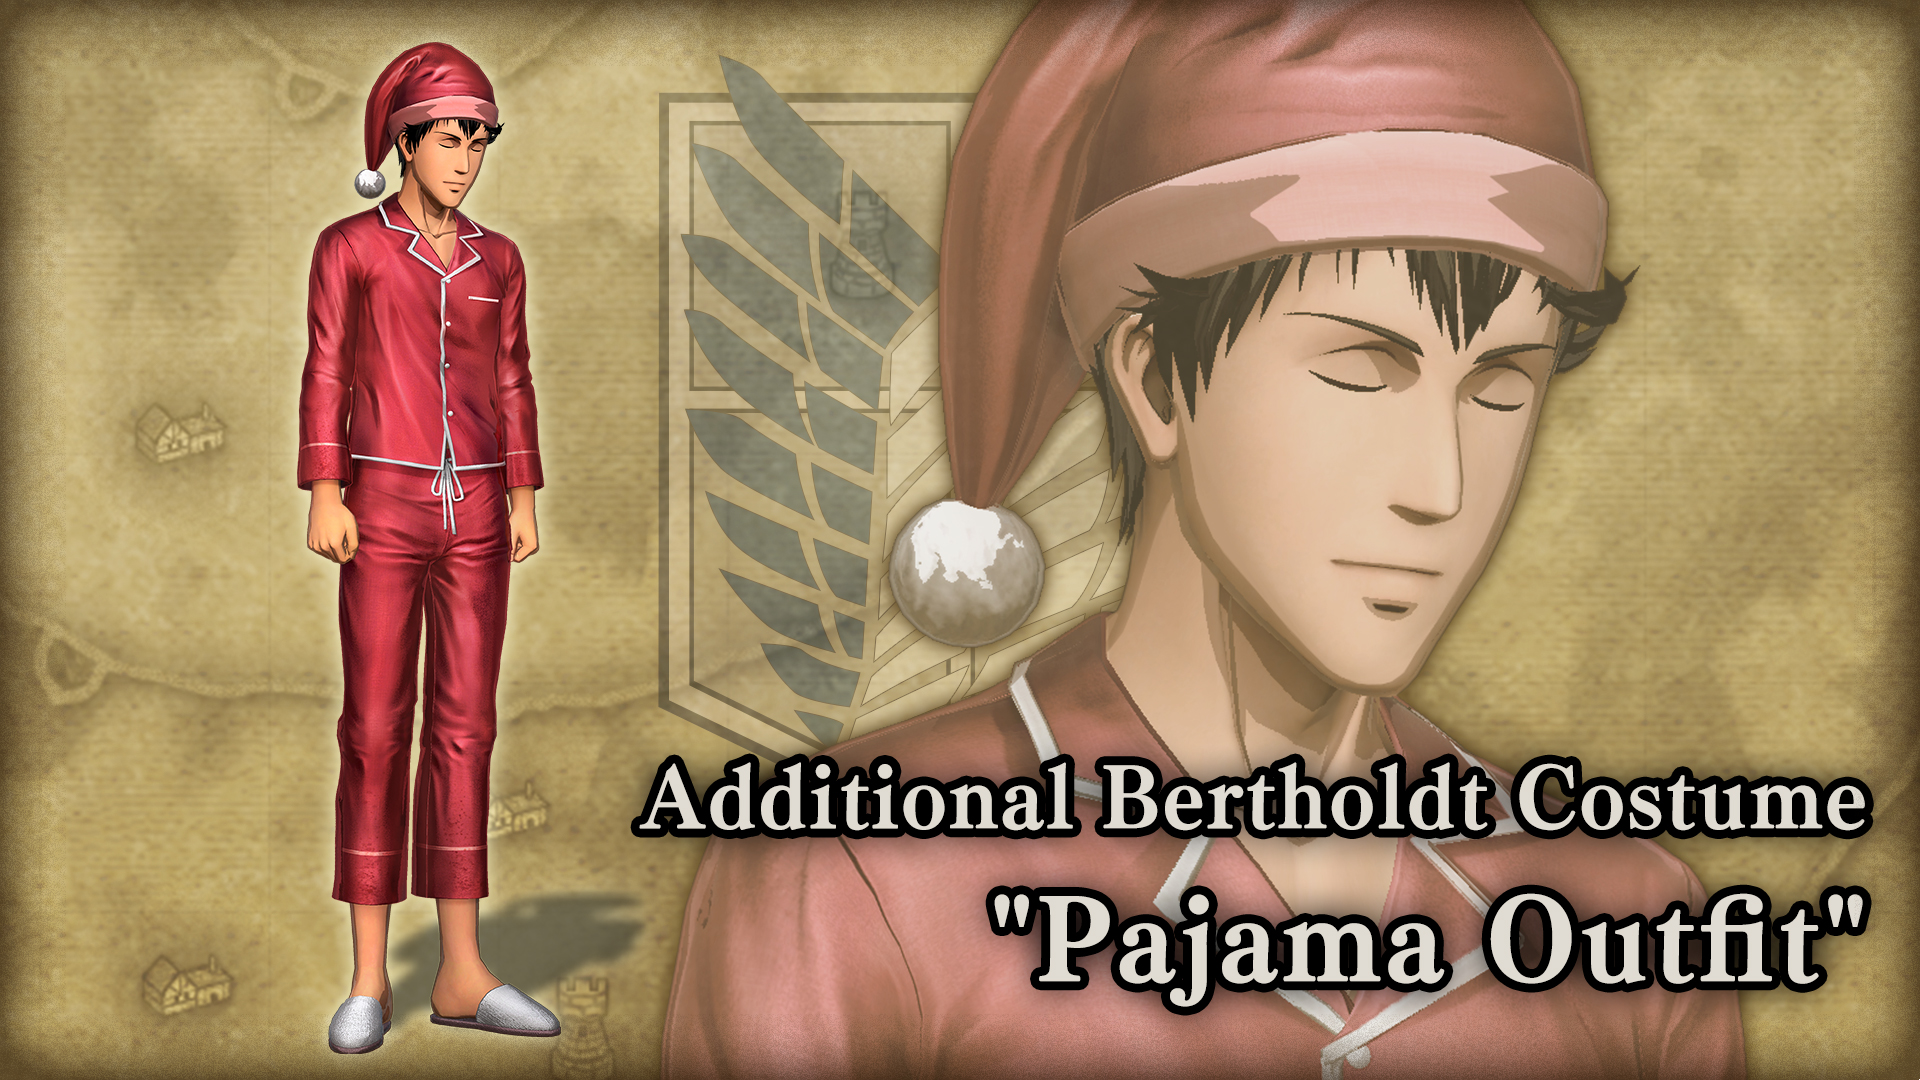 Additional Bertholdt Costume: "Pajama Outfit"